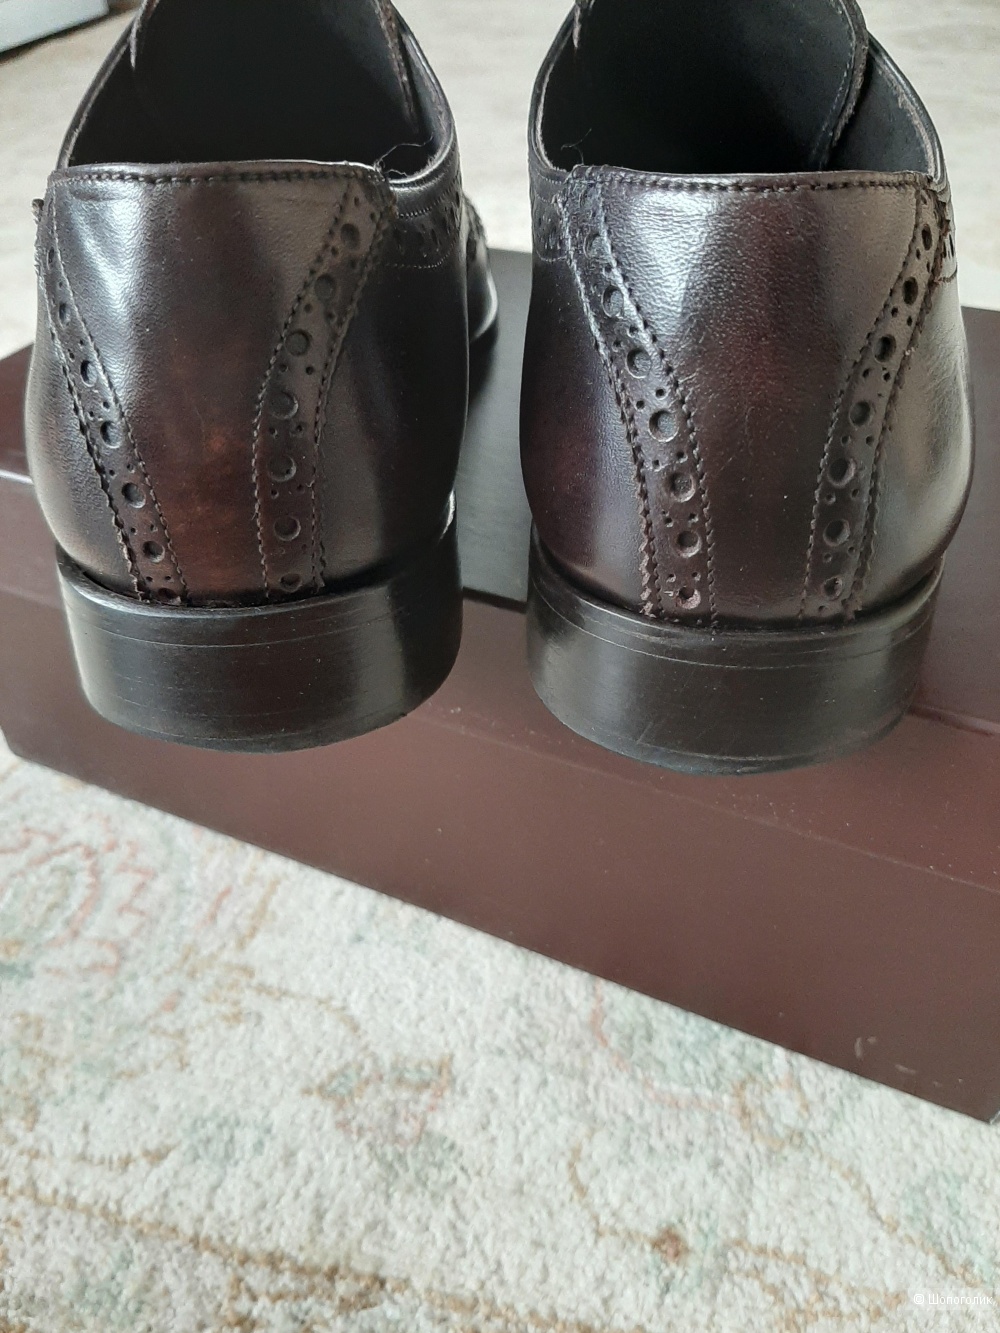 Ботинки Thompson, 41 размер (большемерят)